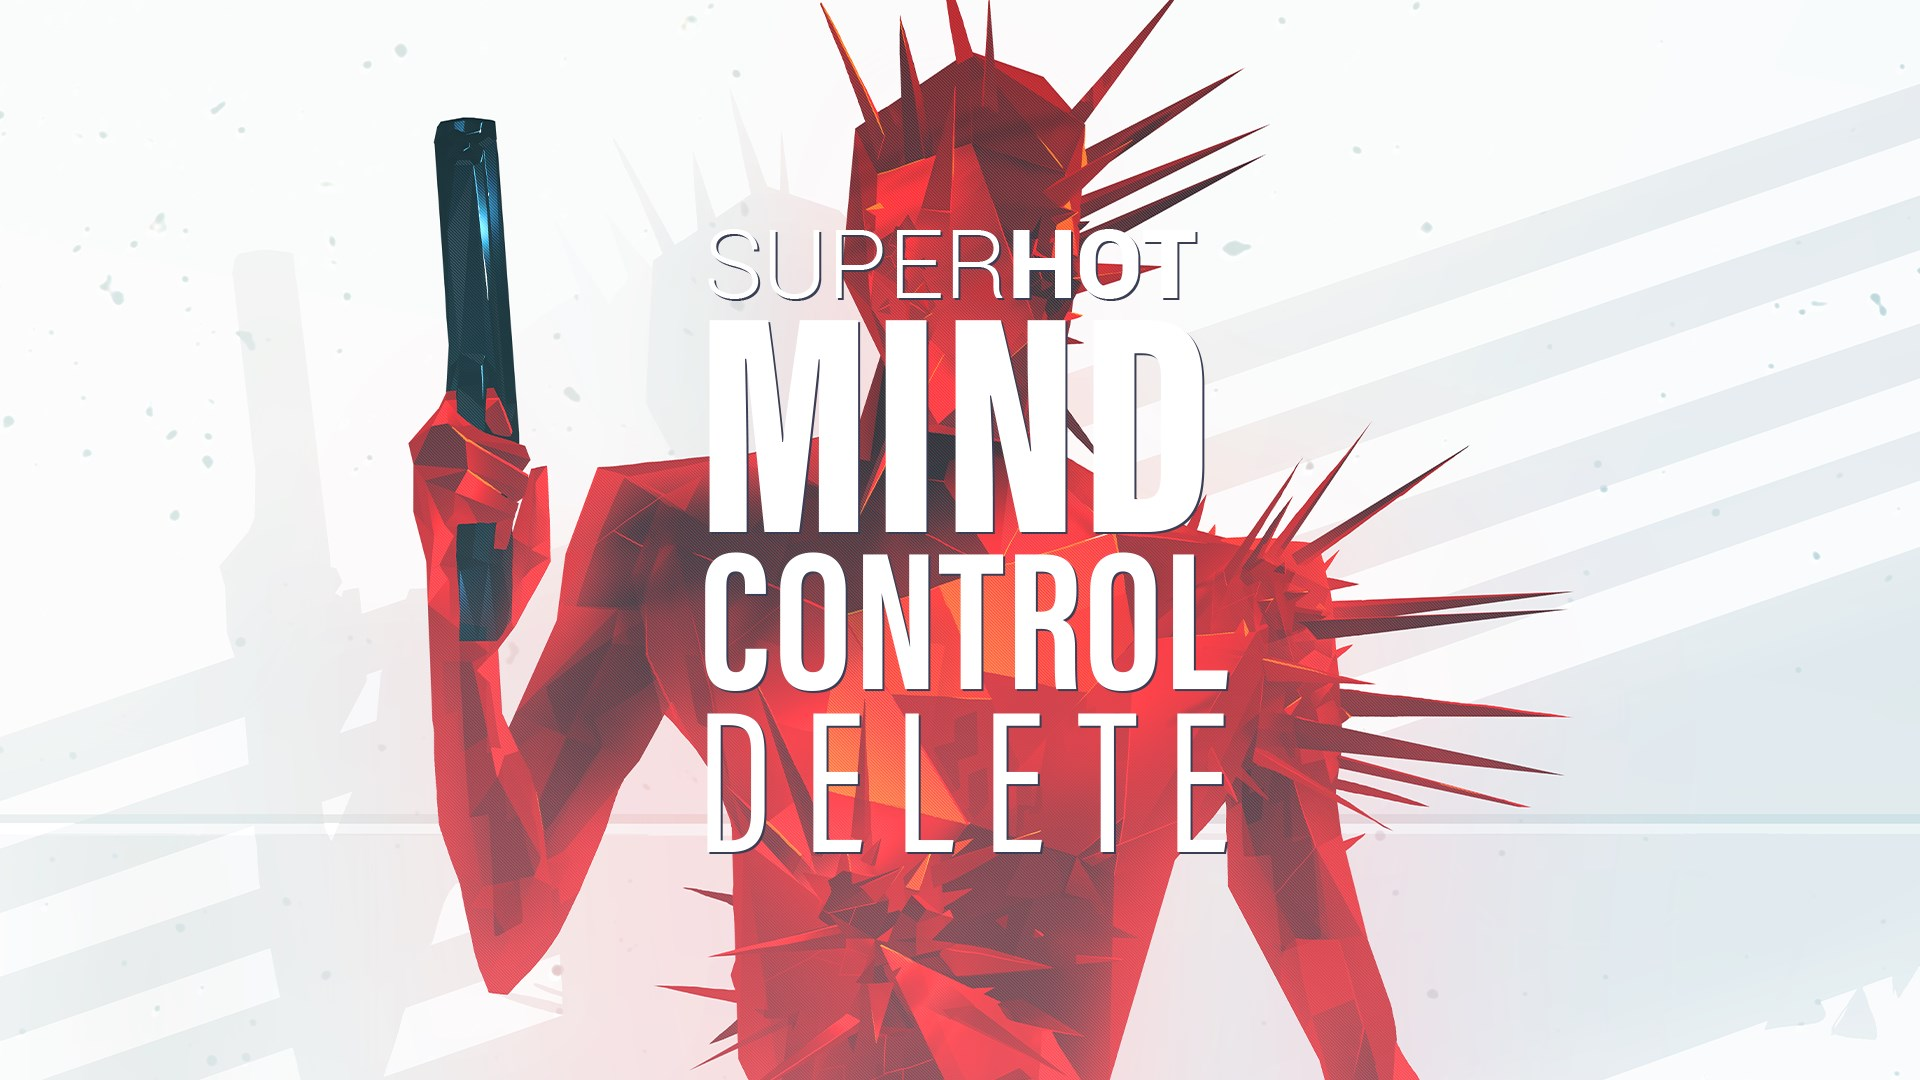 superhot mind control delete length